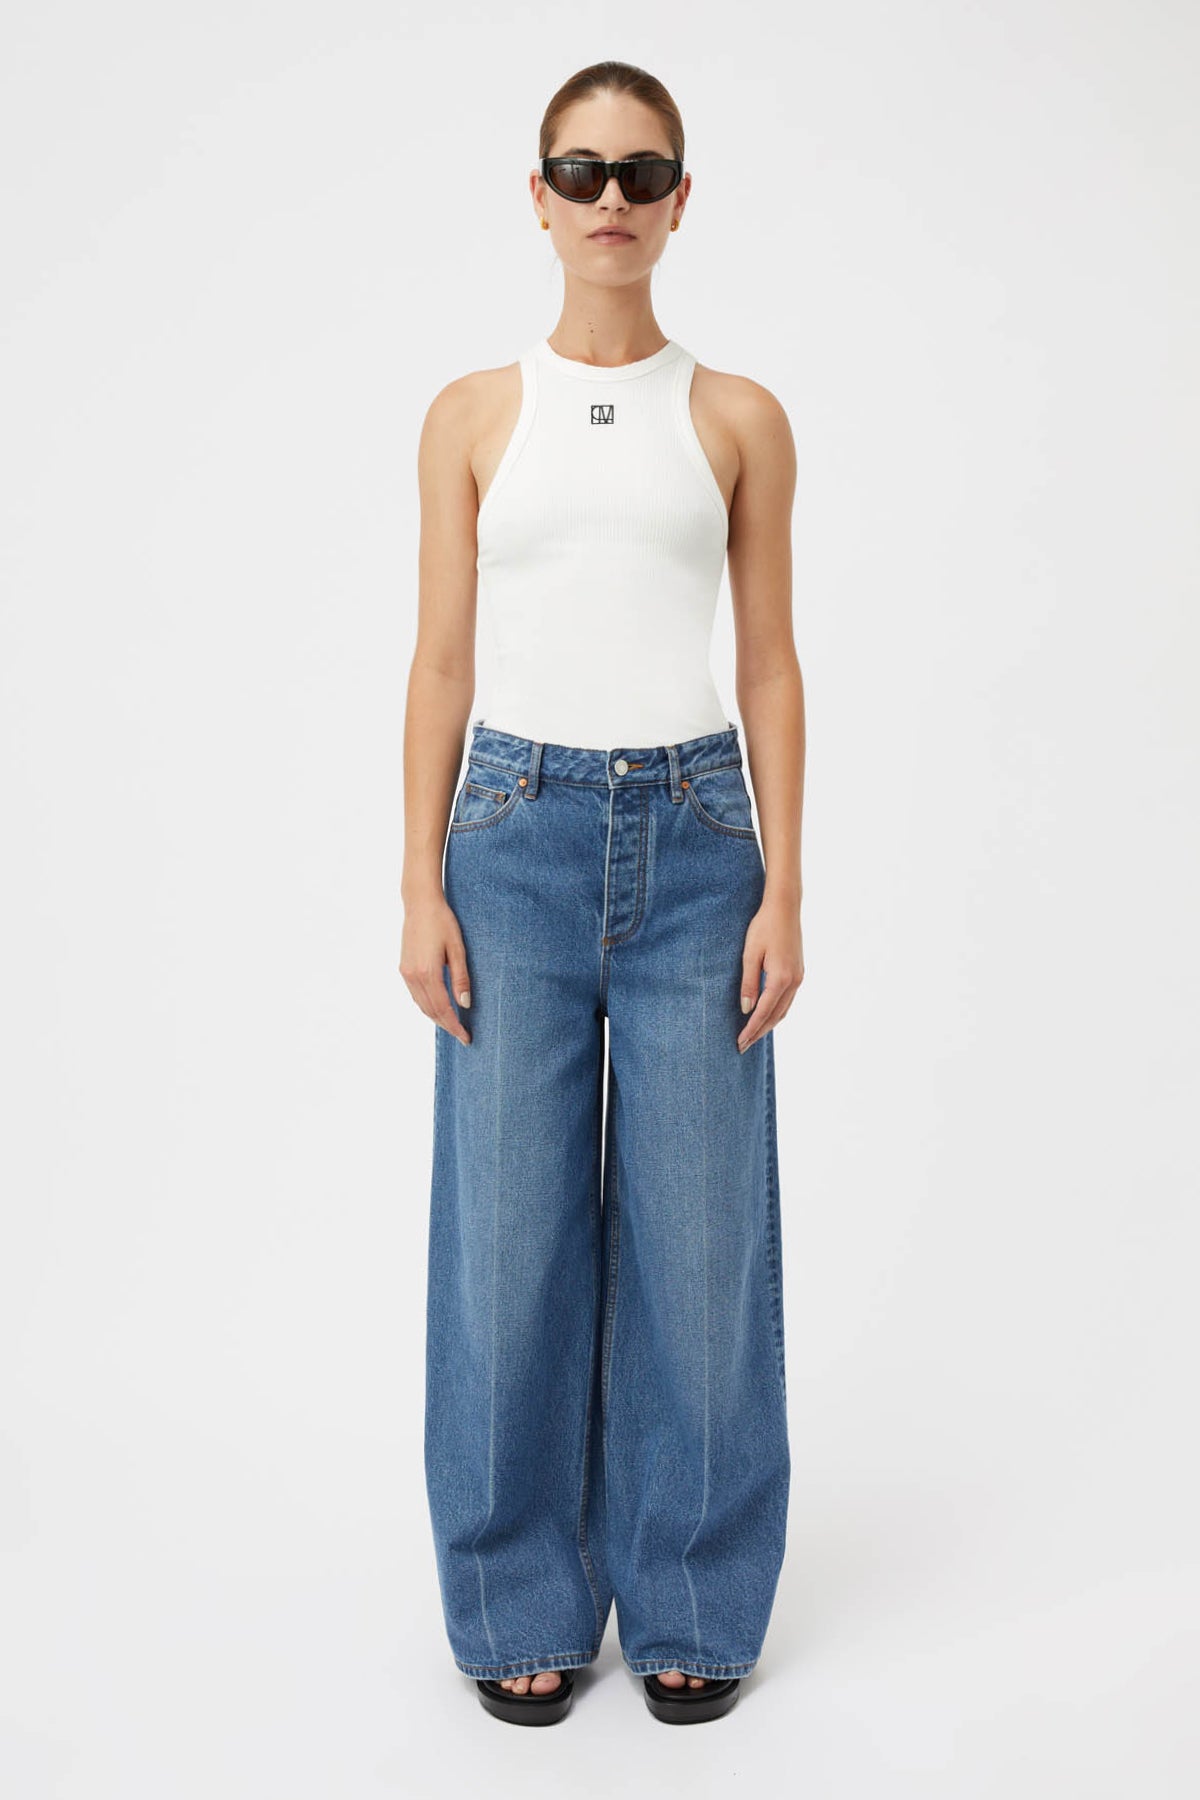 Women's Stretch Denim Dungarees Skirt Bib Jeans mini Dress with pockets UK  4-12